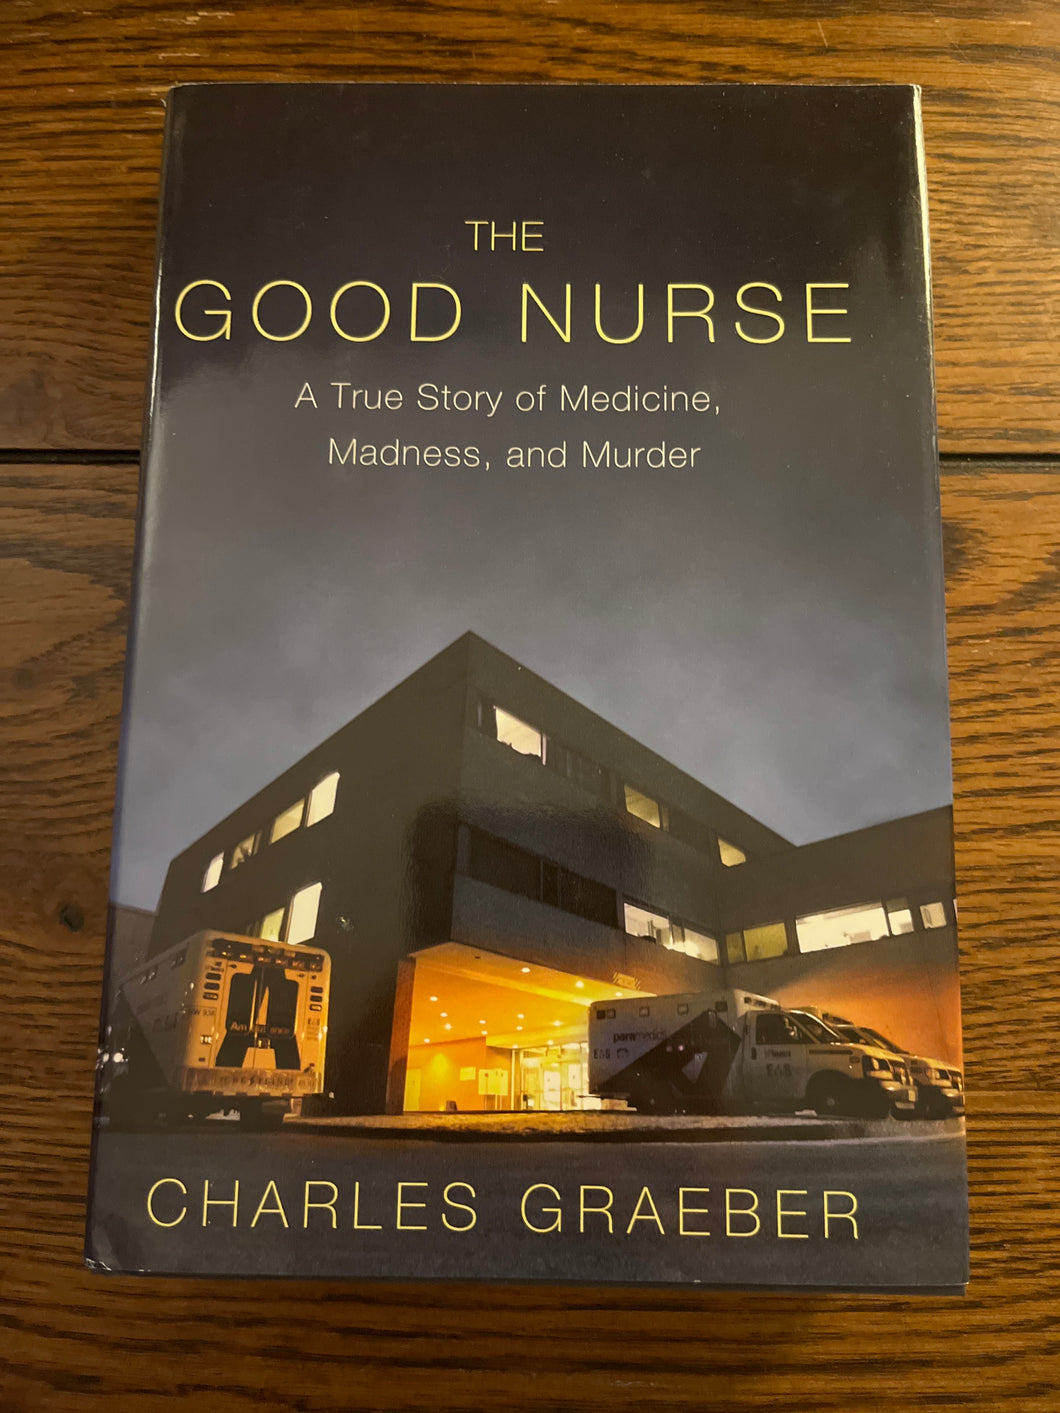 The Good Nurse: A True Story of Medicine, Madness and Murder